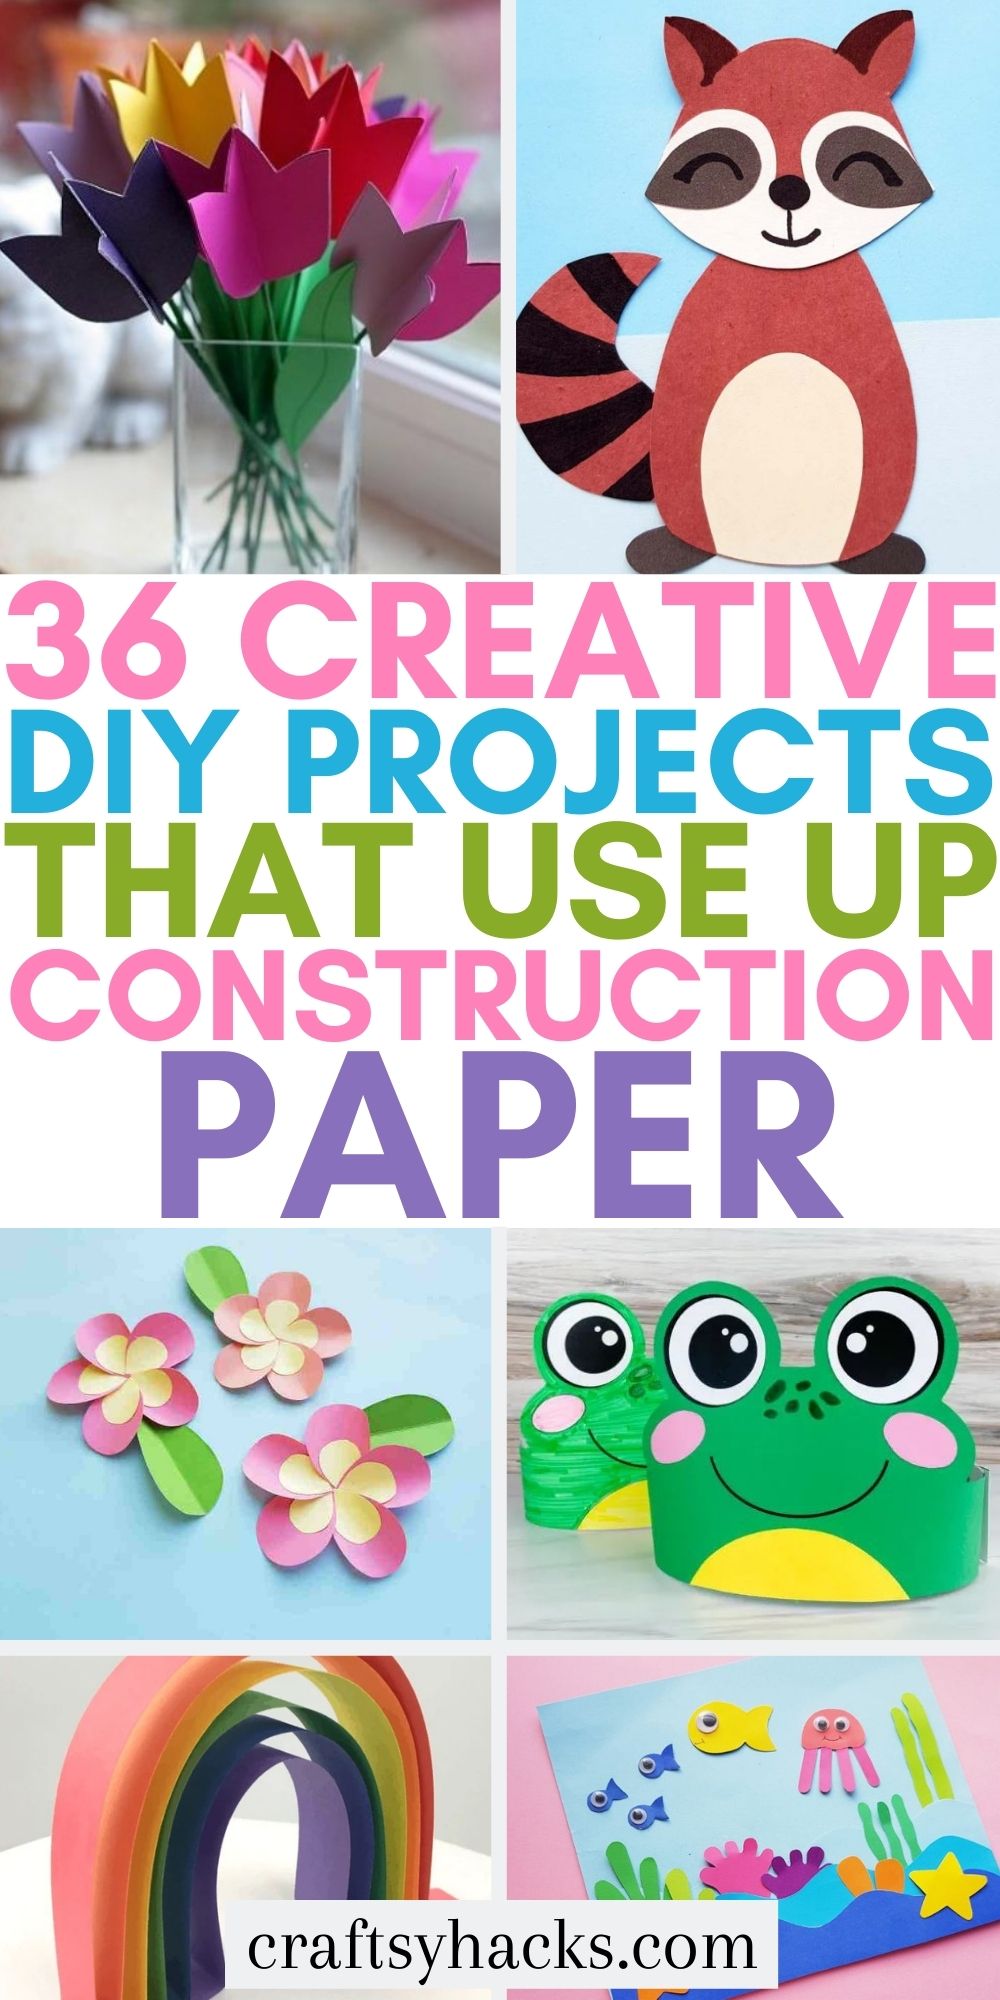 36 Coolest Construction Paper Crafts - Craftsy Hacks